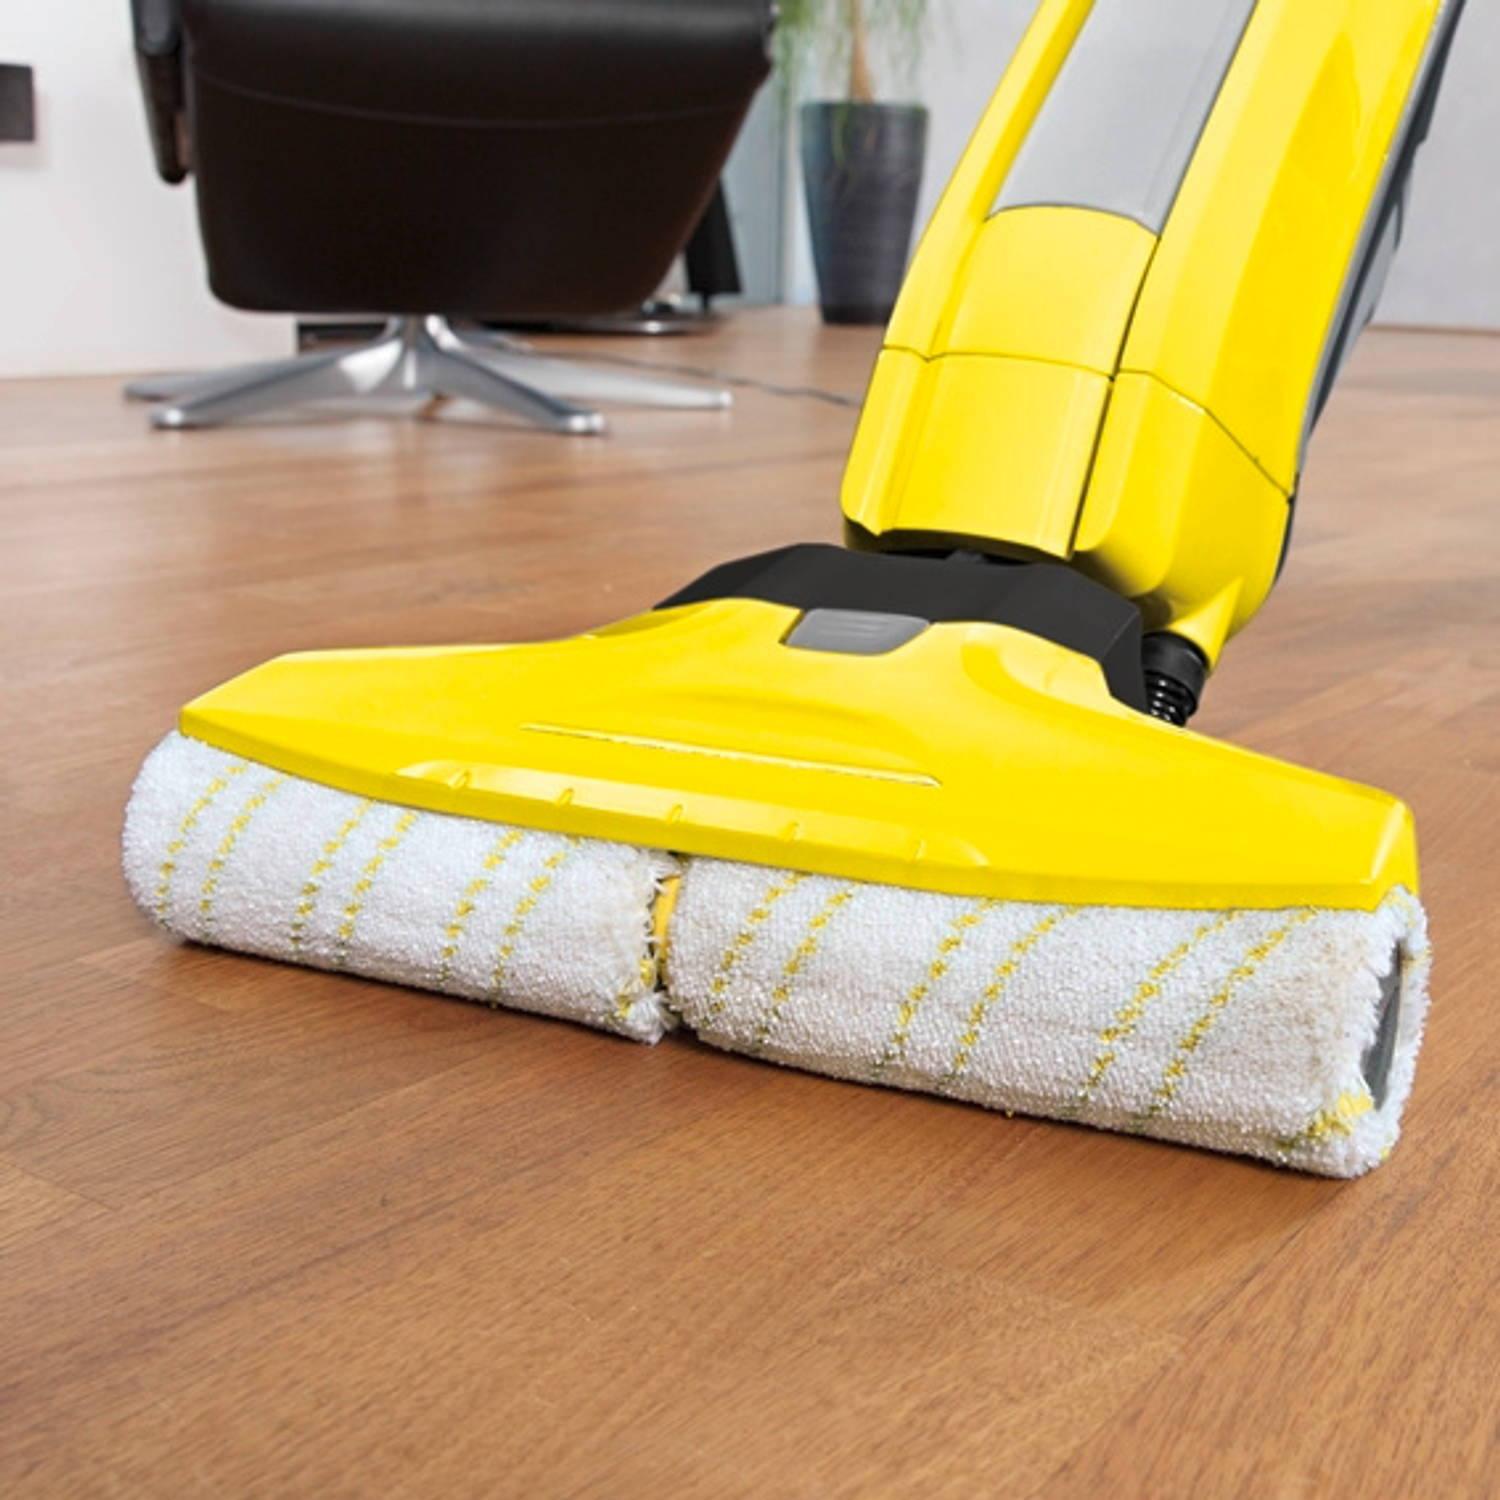 opvolger Deter Draad Karcher Floor Cleaner FC5 - geel | Blokker